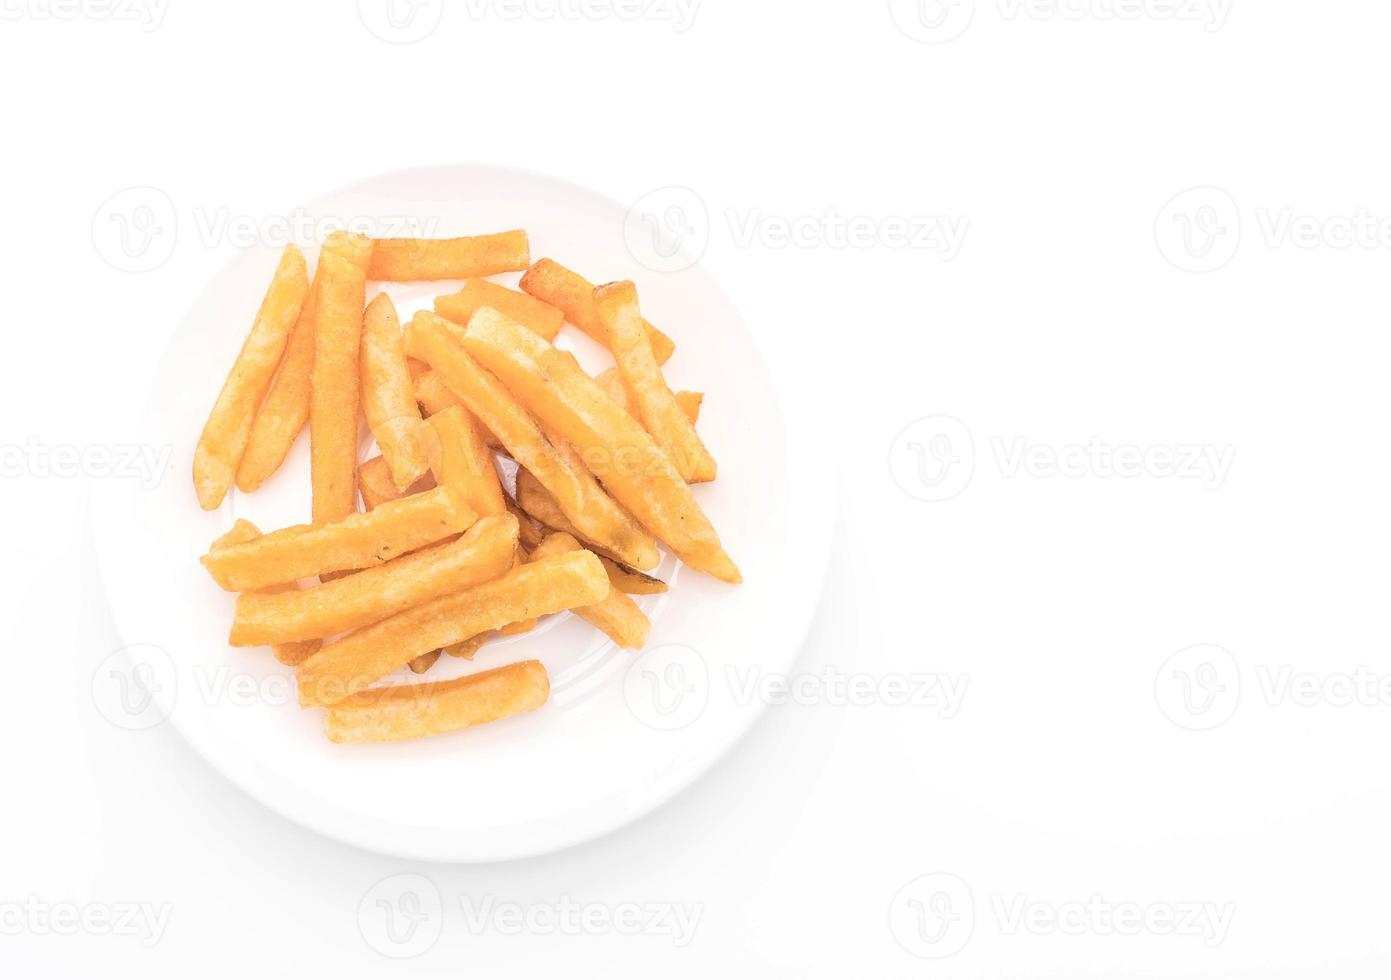 pommes frites på vit bakgrund foto